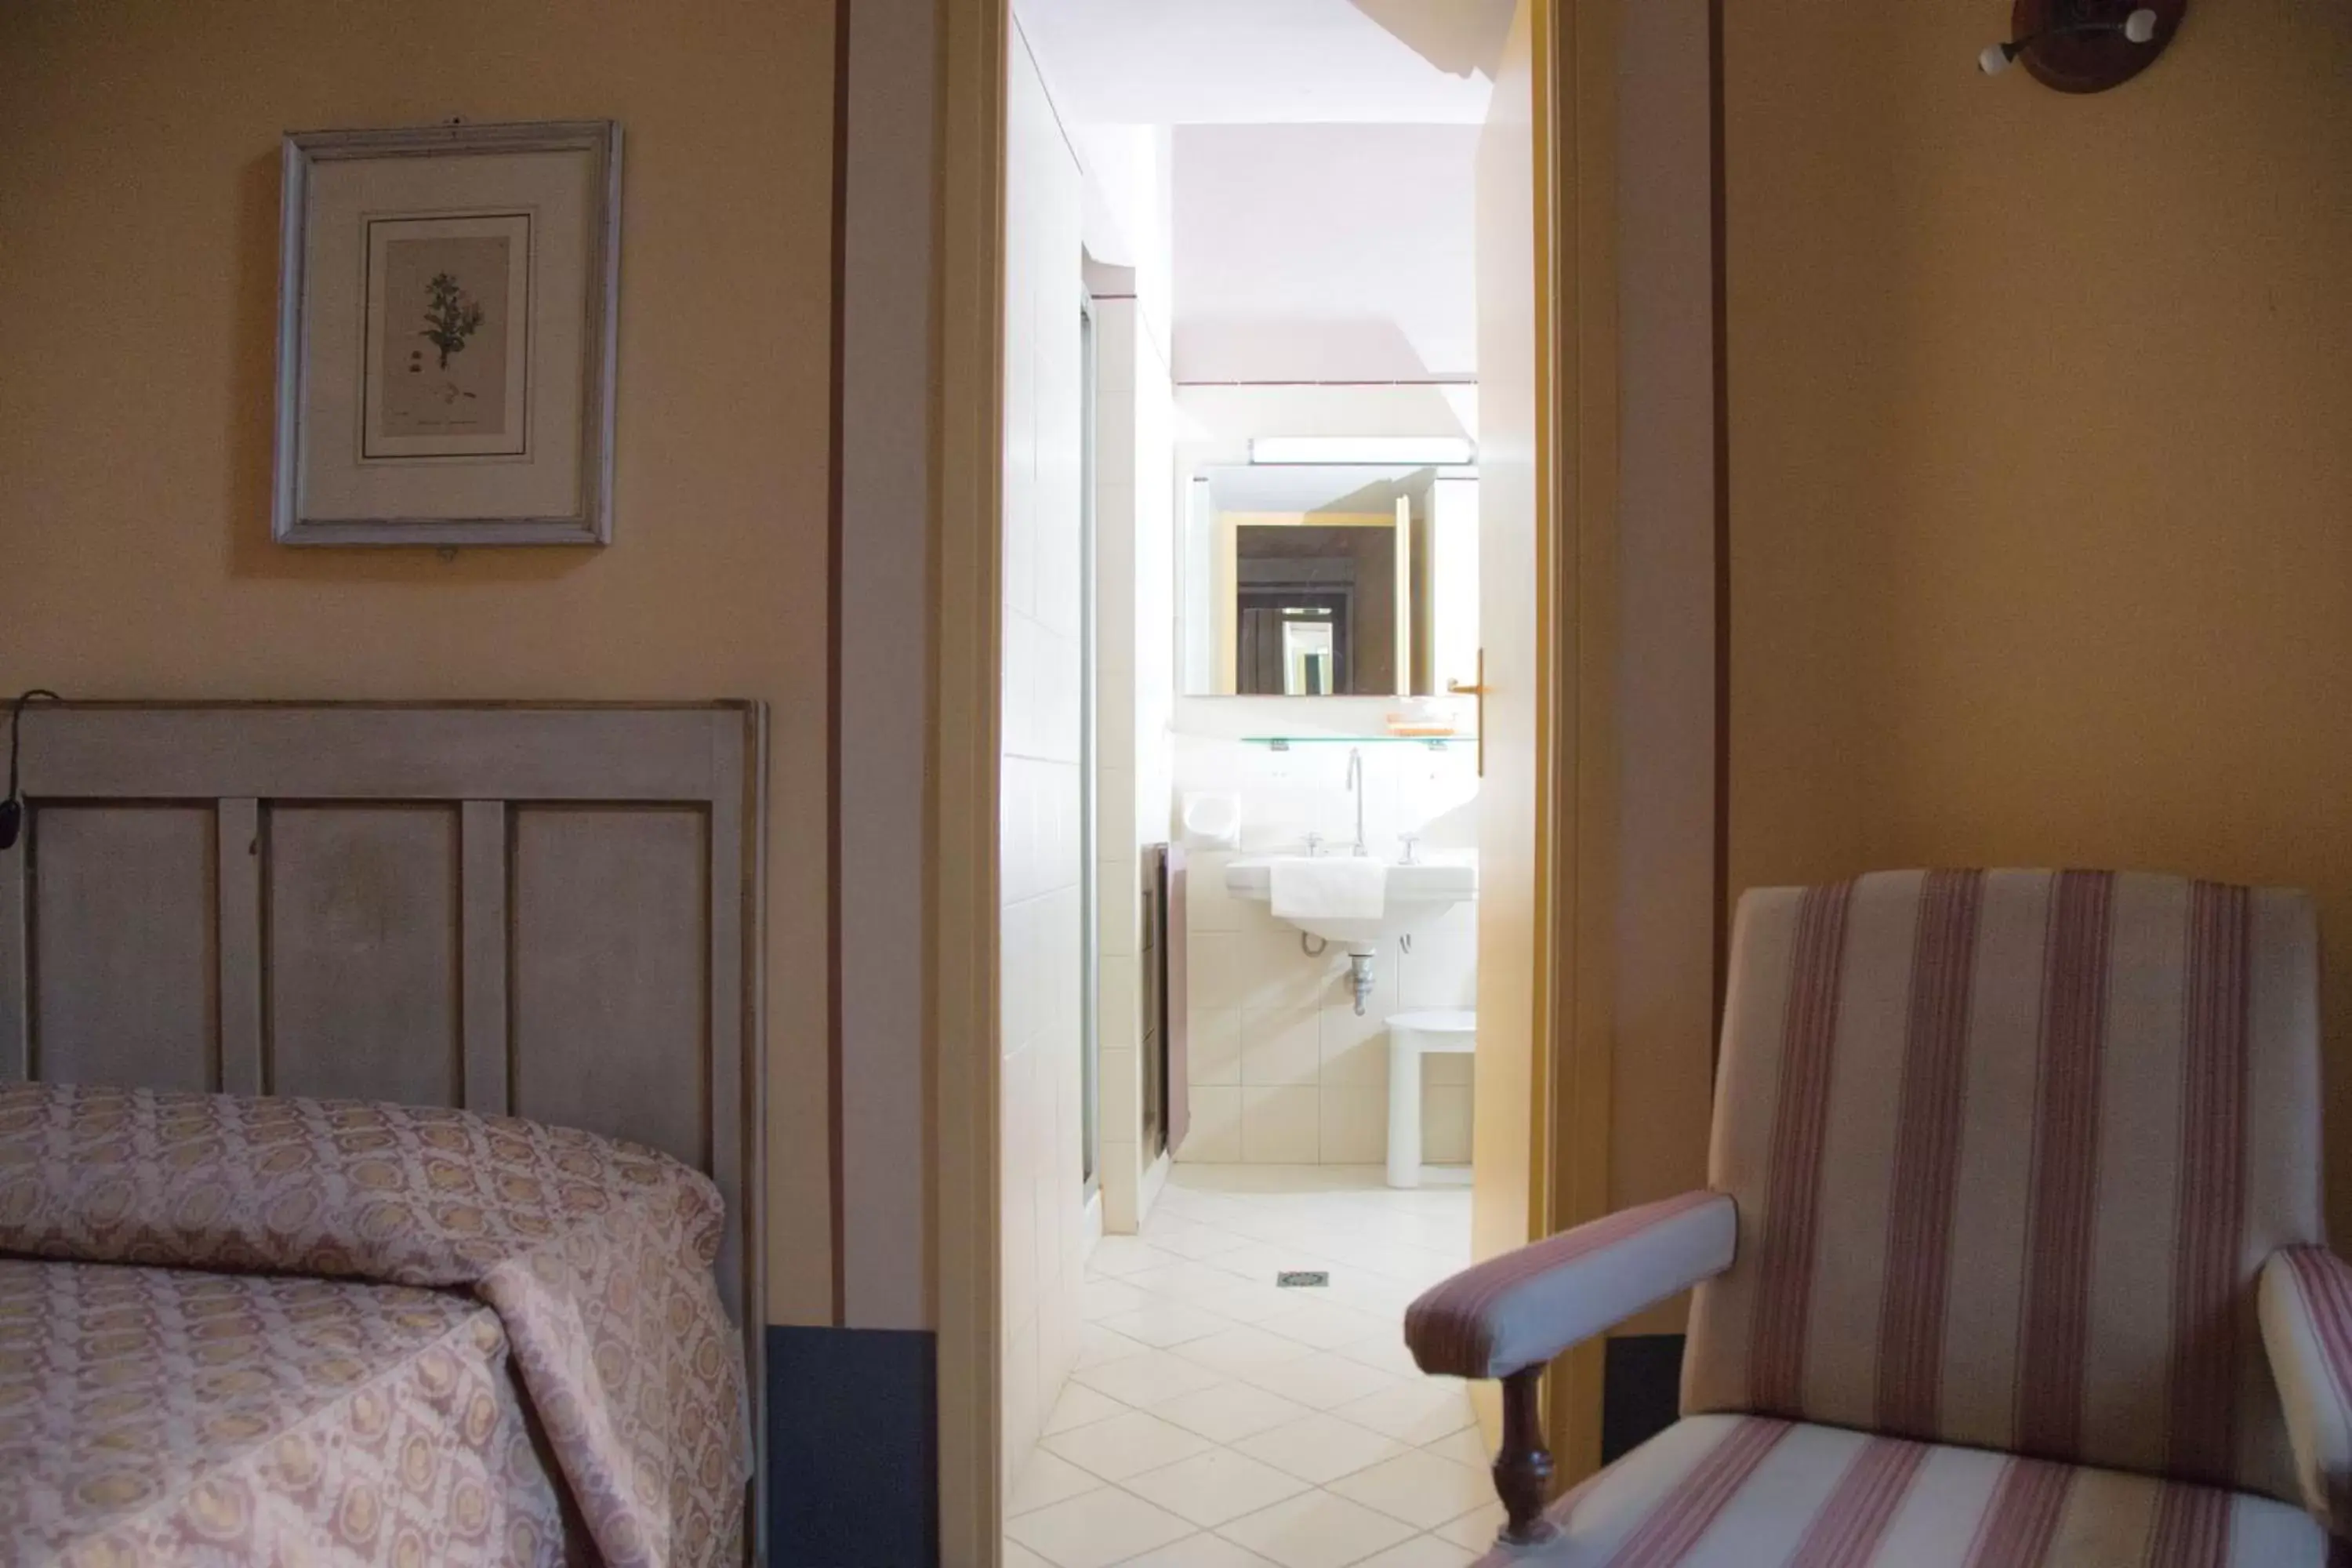 Bathroom, Seating Area in Royal Victoria Hotel